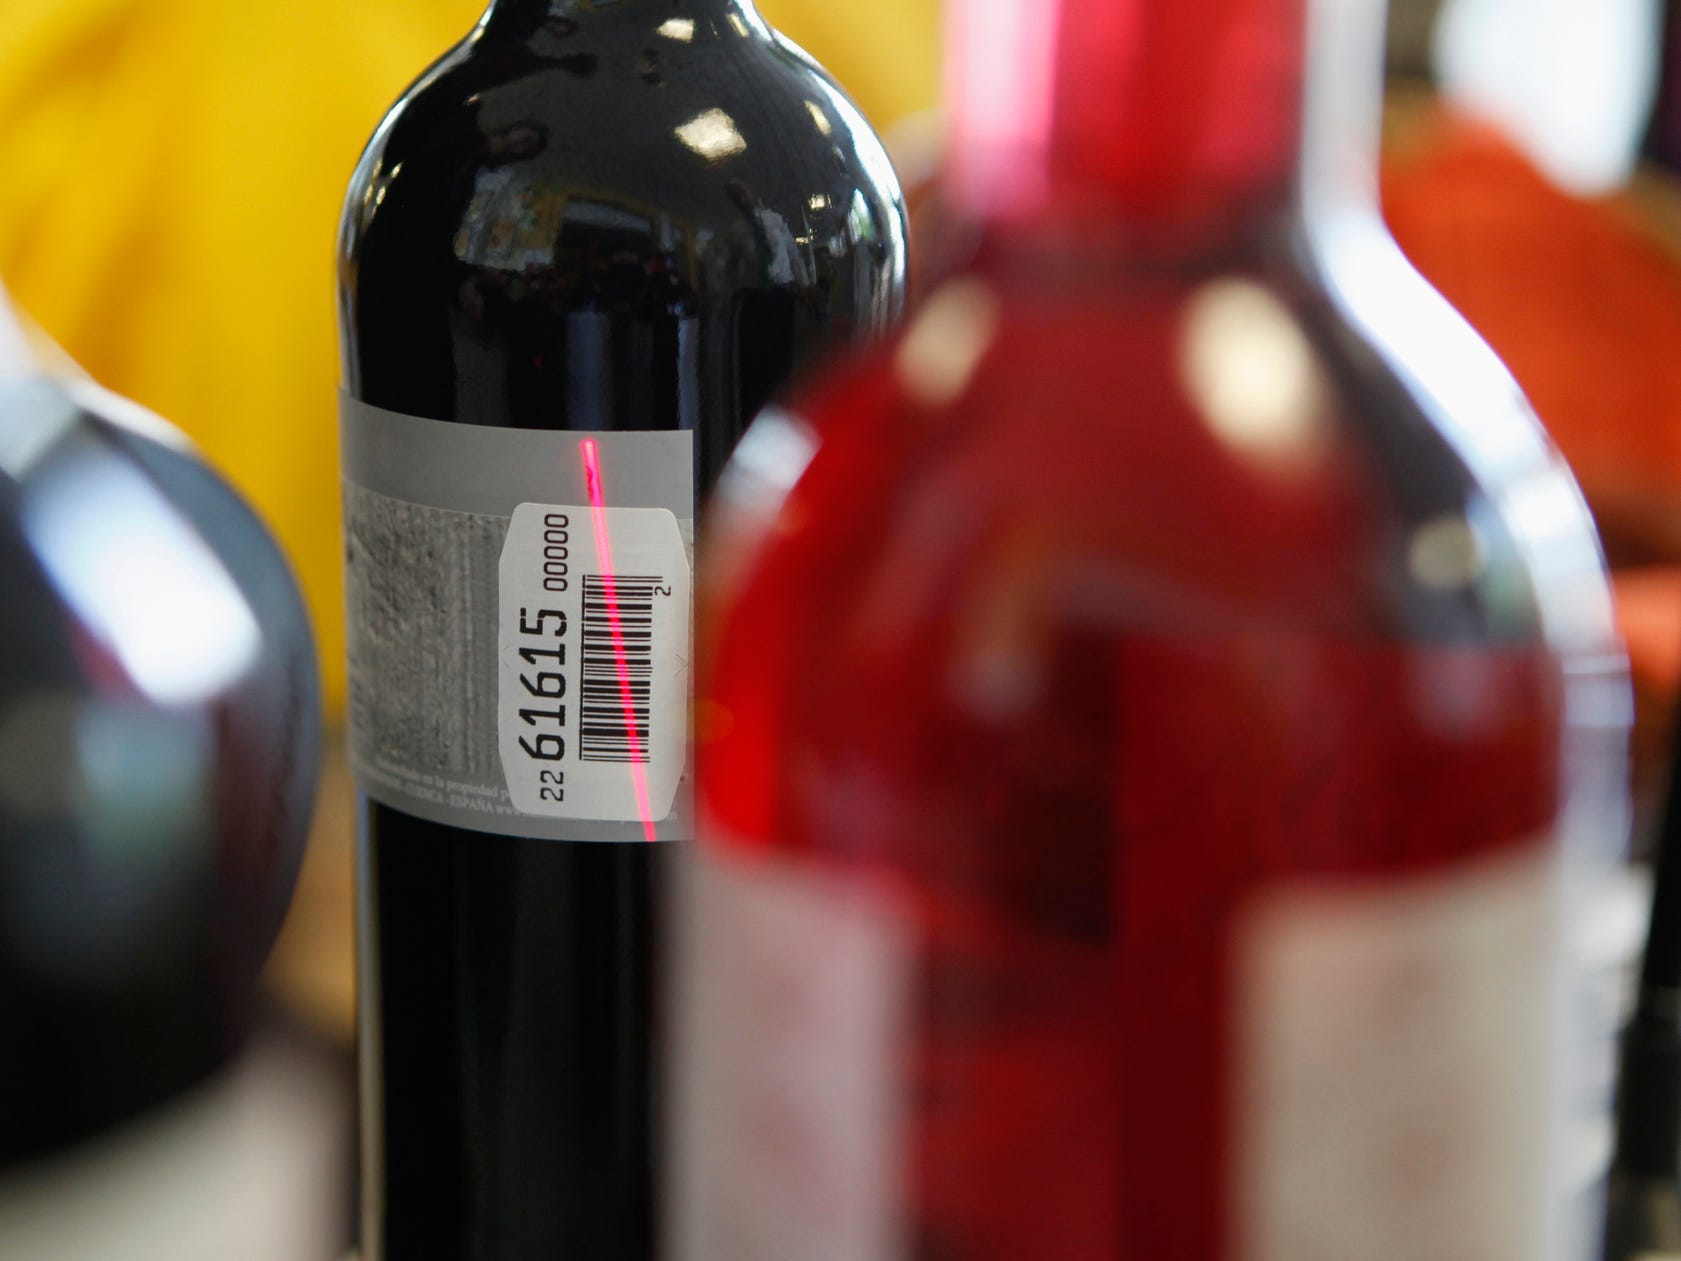 Scanning a wine bottle barcode